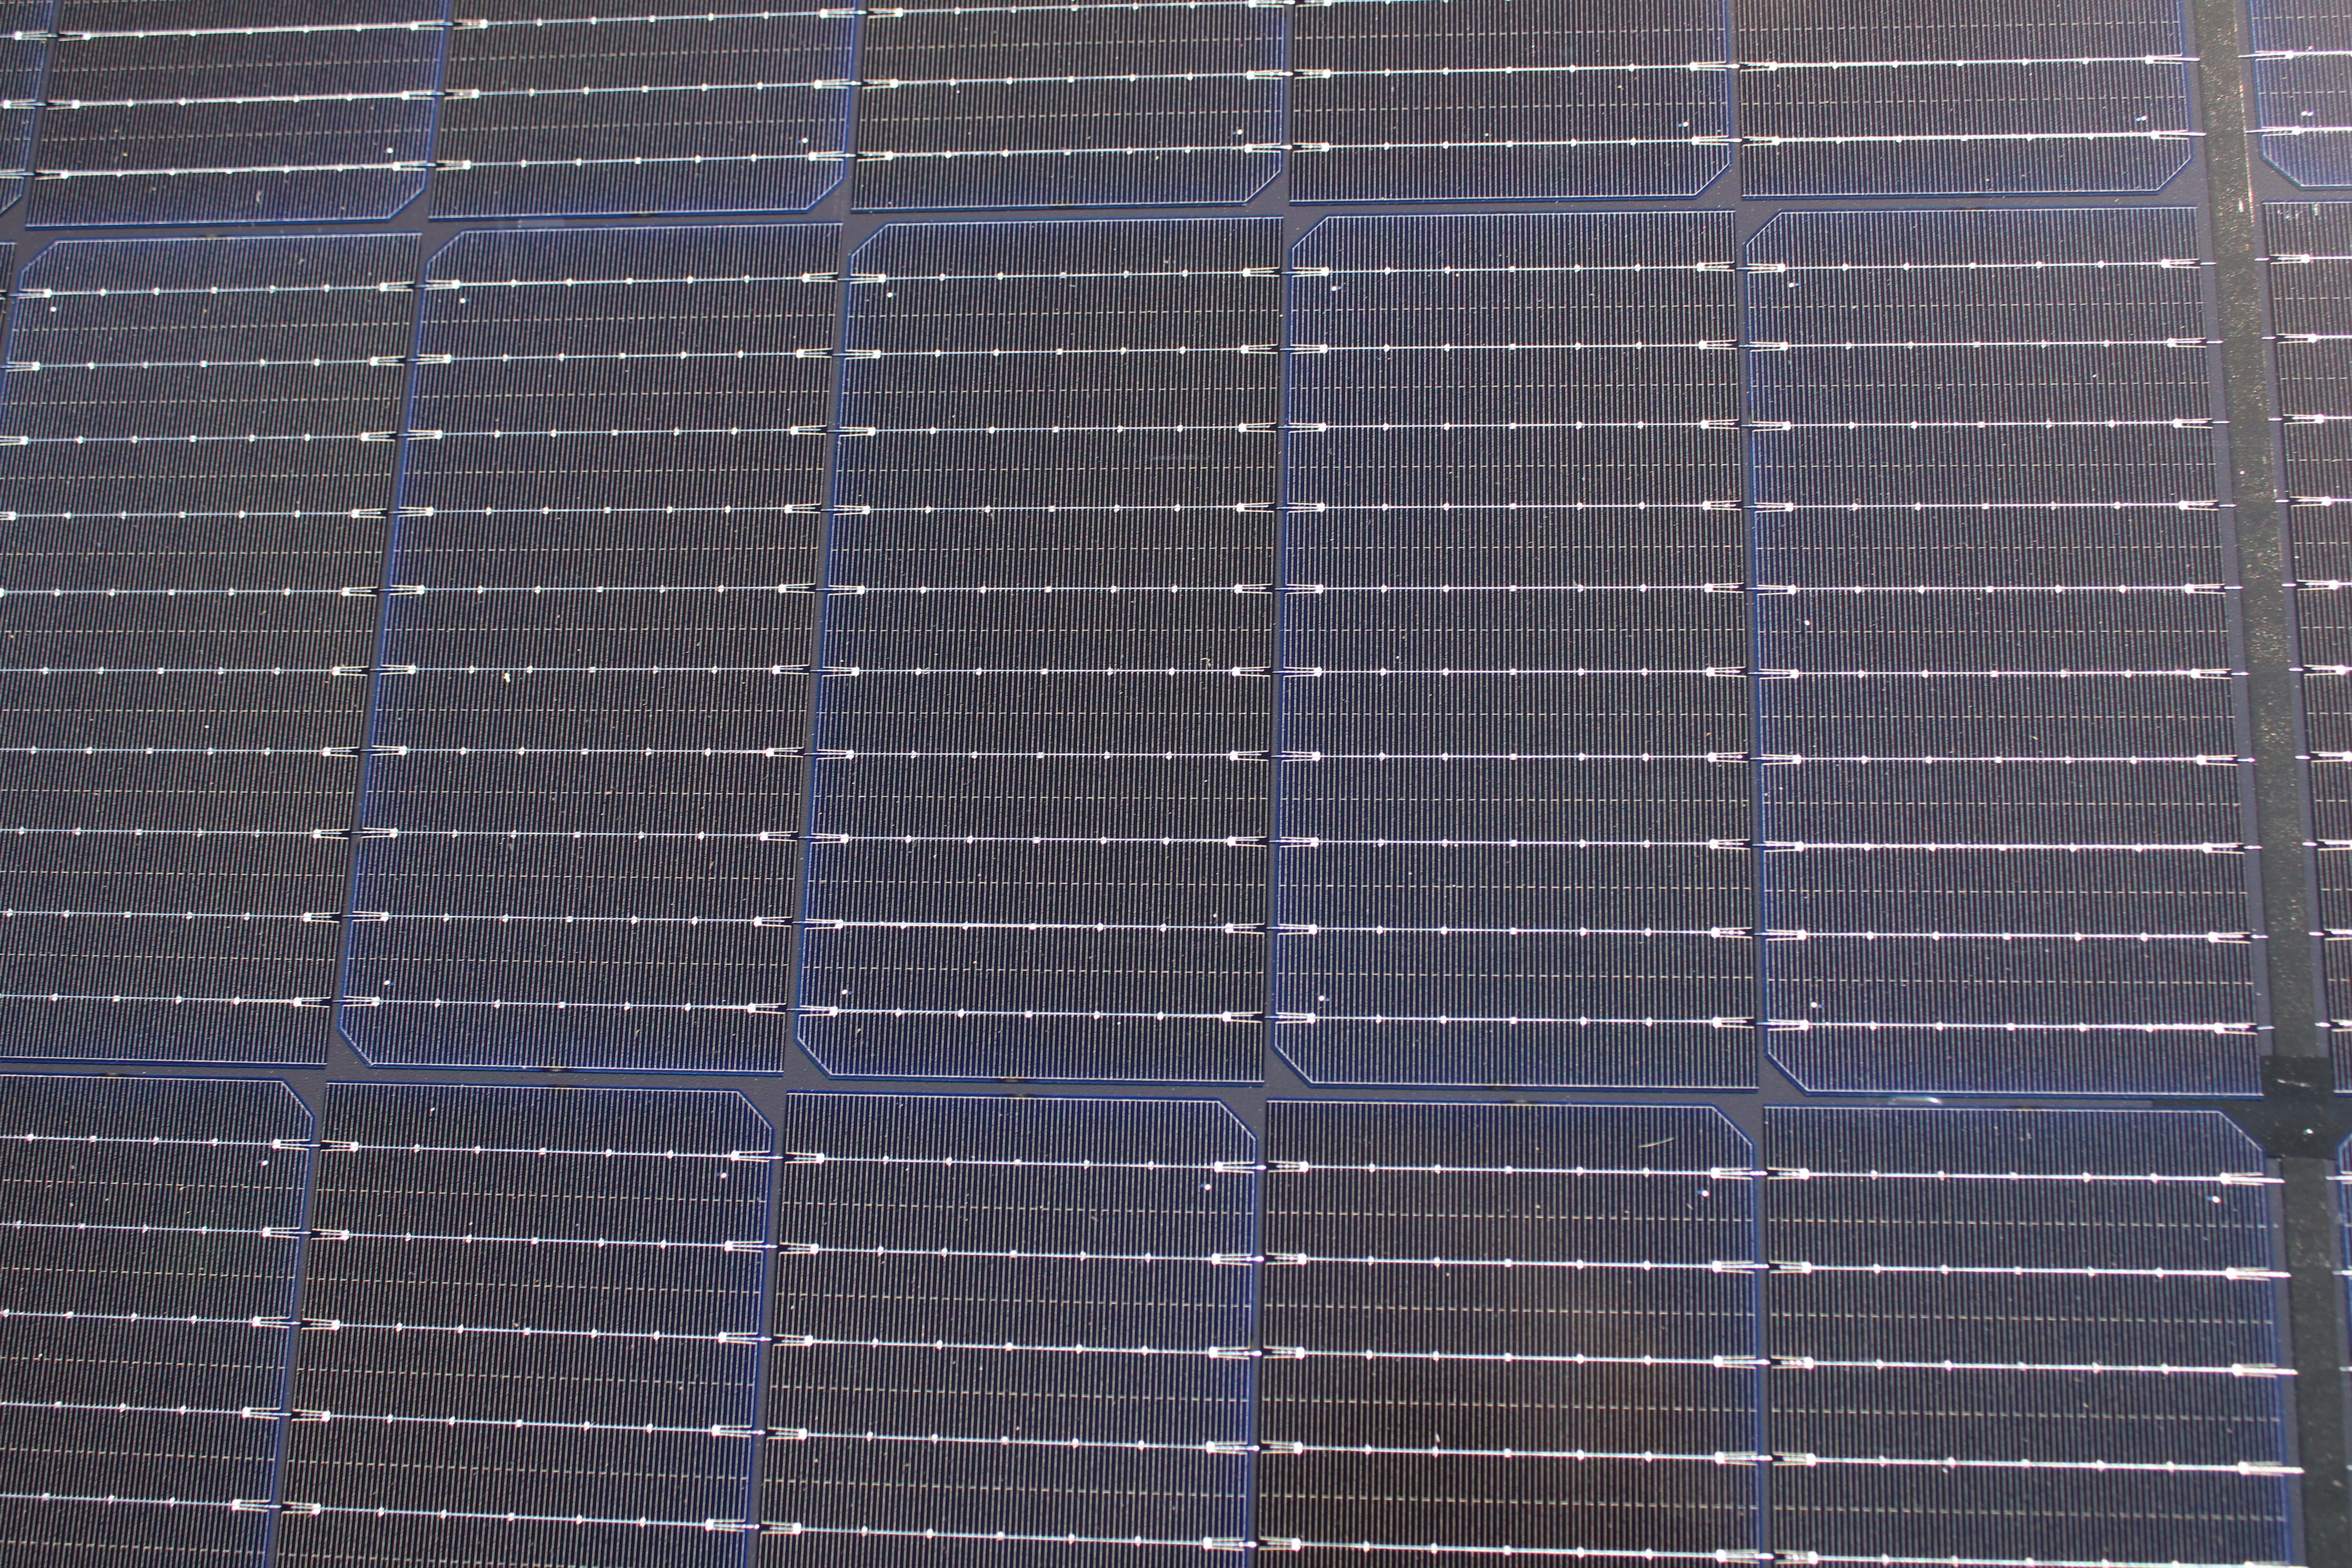 EcoFlow PowerStream Balcony Solar System, Grid-Tied Microinverter,400W  Rigid Solar Panels × 2, DELTA Pro Power Station 3600Wh - AliExpress